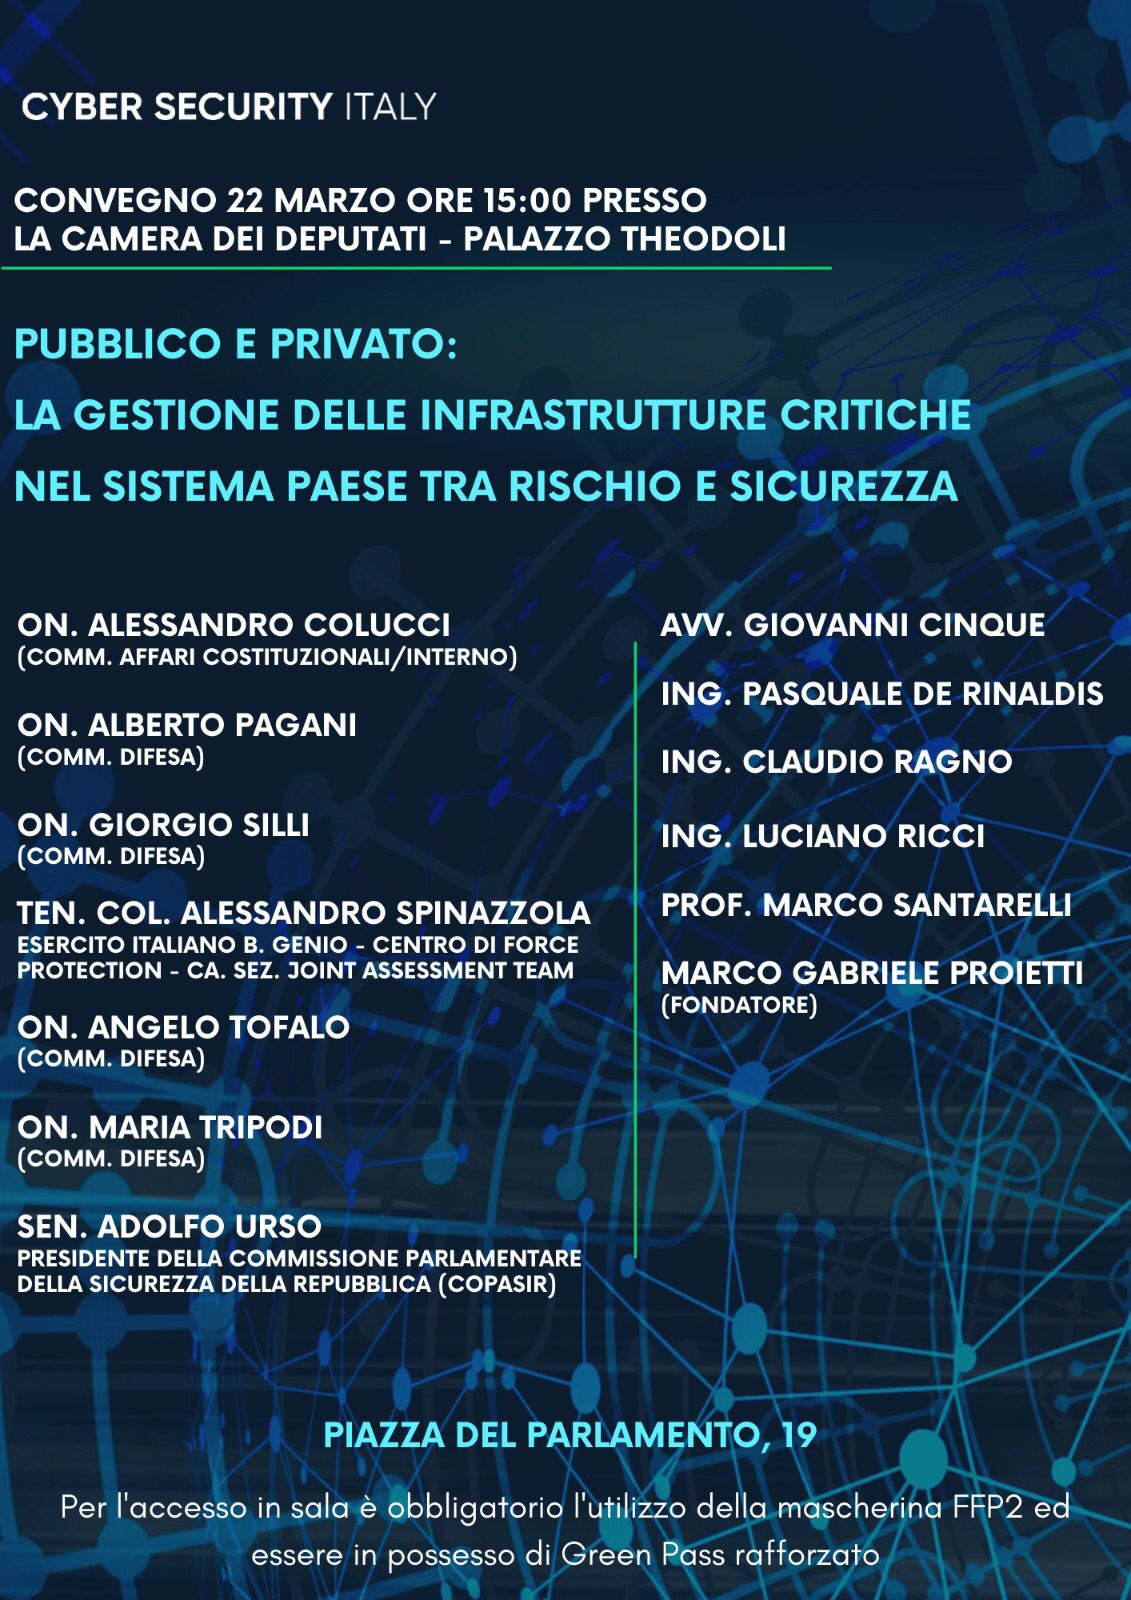 Convegno di Cyber Security Italy